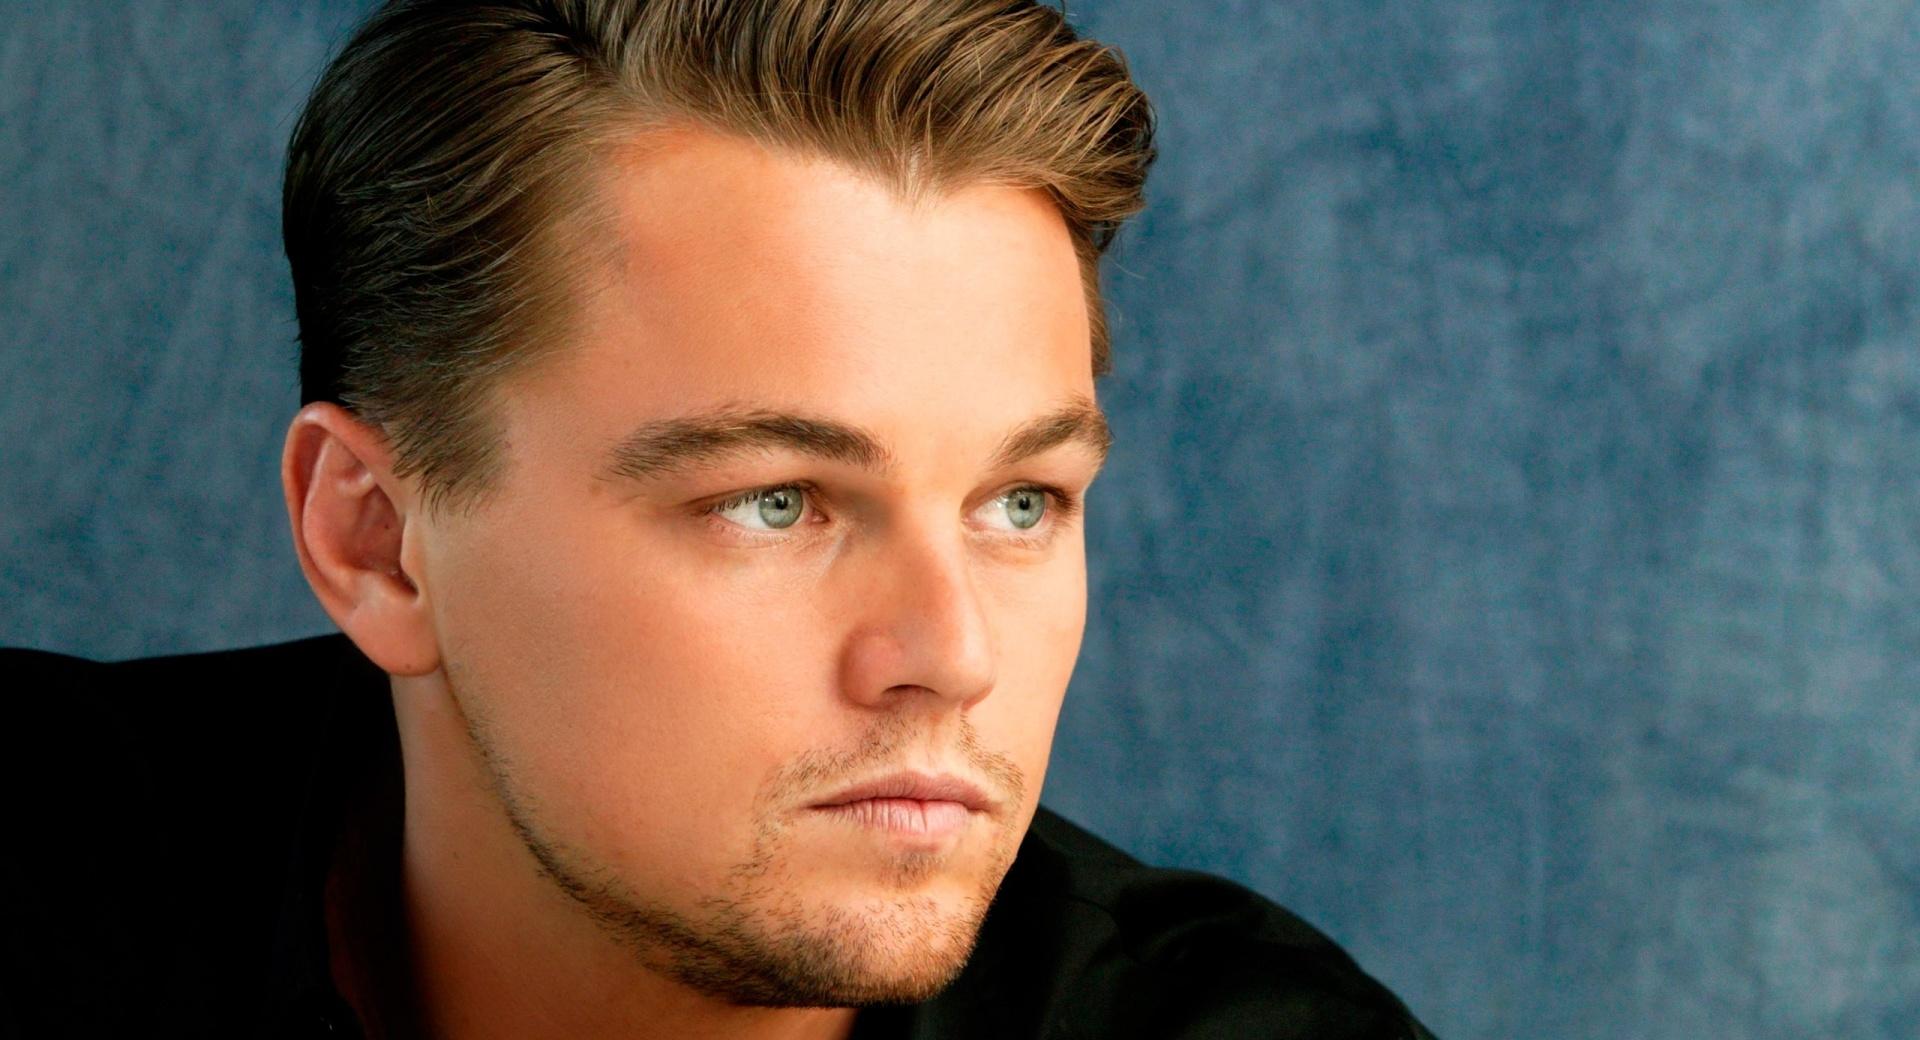 Leonardo DiCaprio Portrait at 2048 x 2048 iPad size wallpapers HD quality